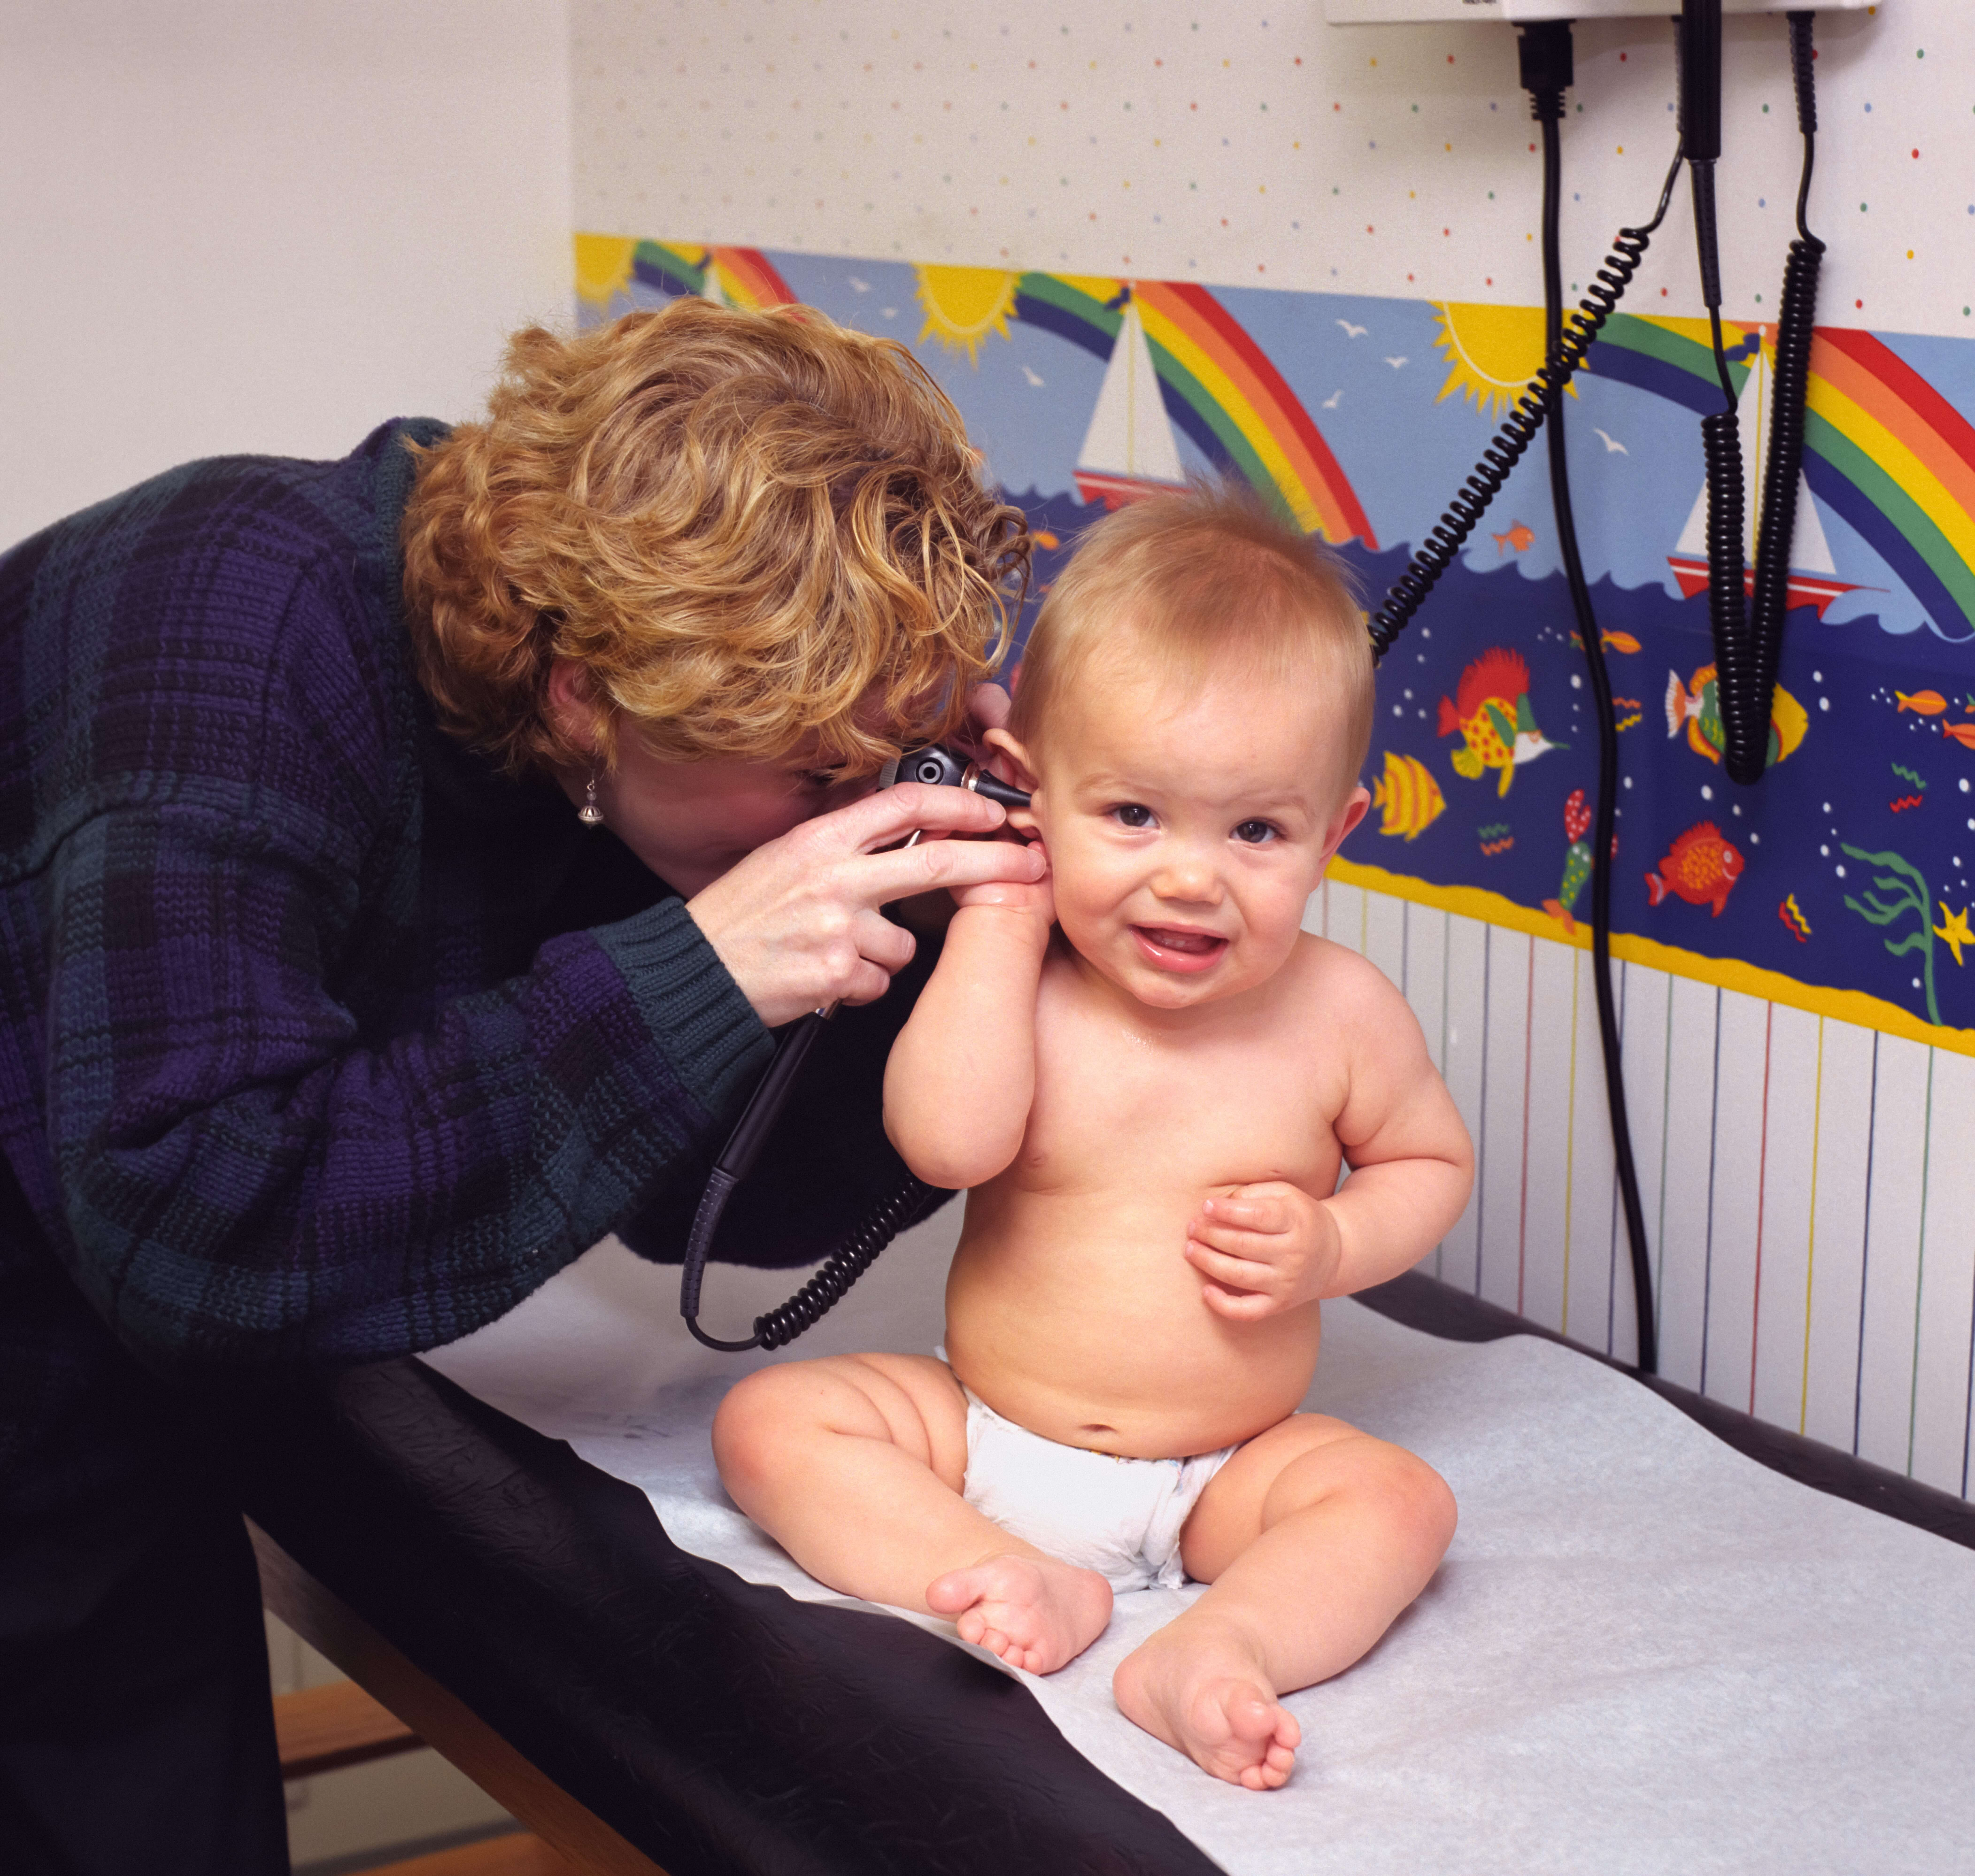 Doctor examining baby's ear